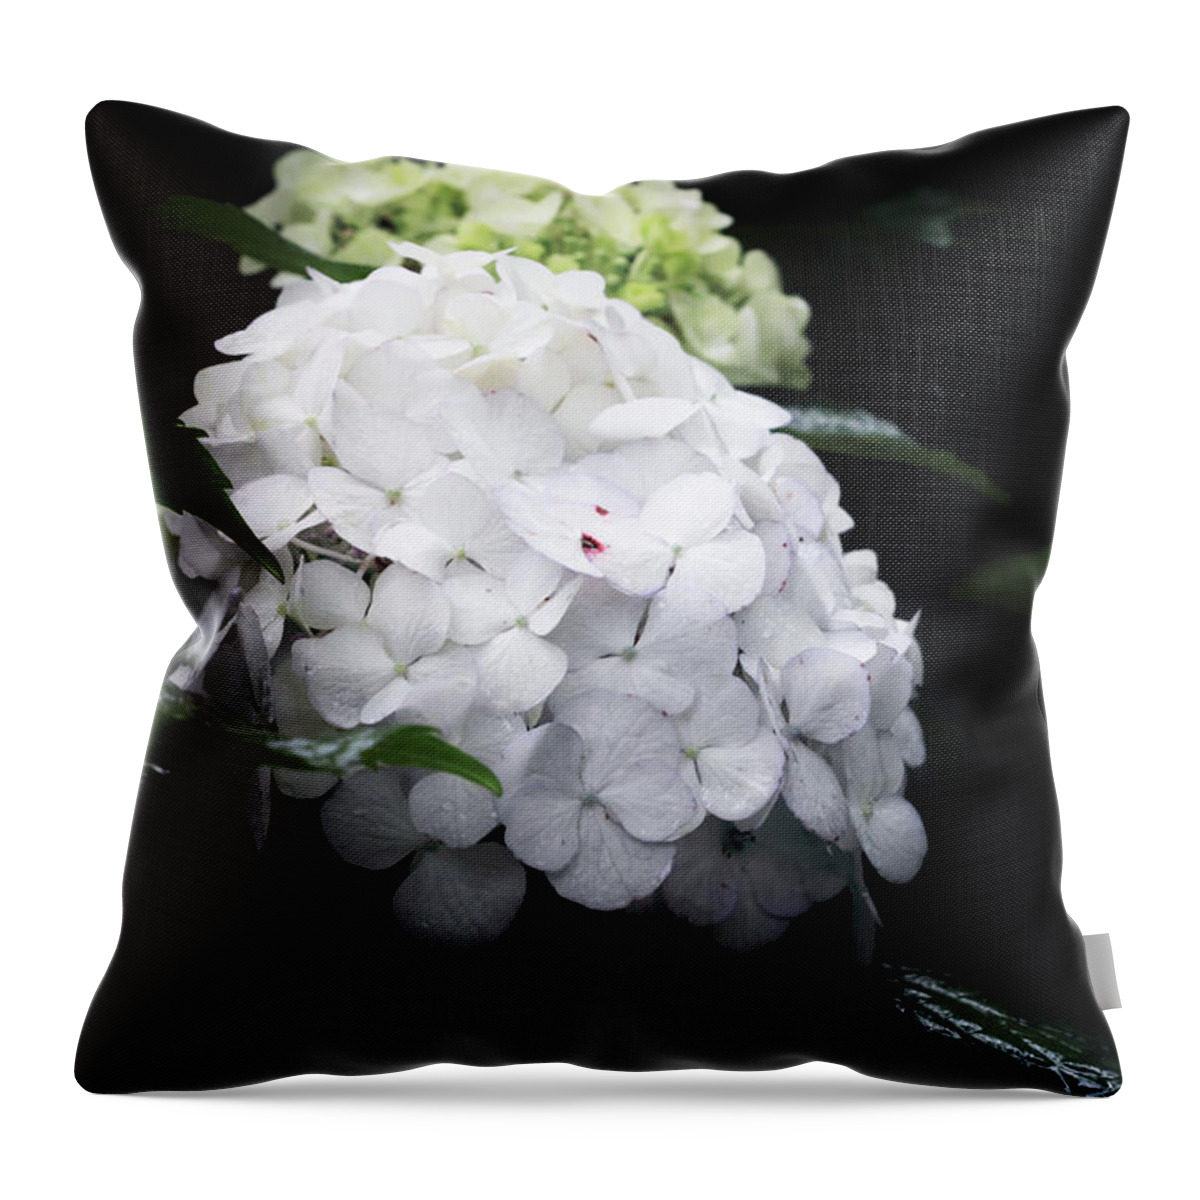 Summer Throw Pillow featuring the photograph Hydrangea by Stephanie Frey